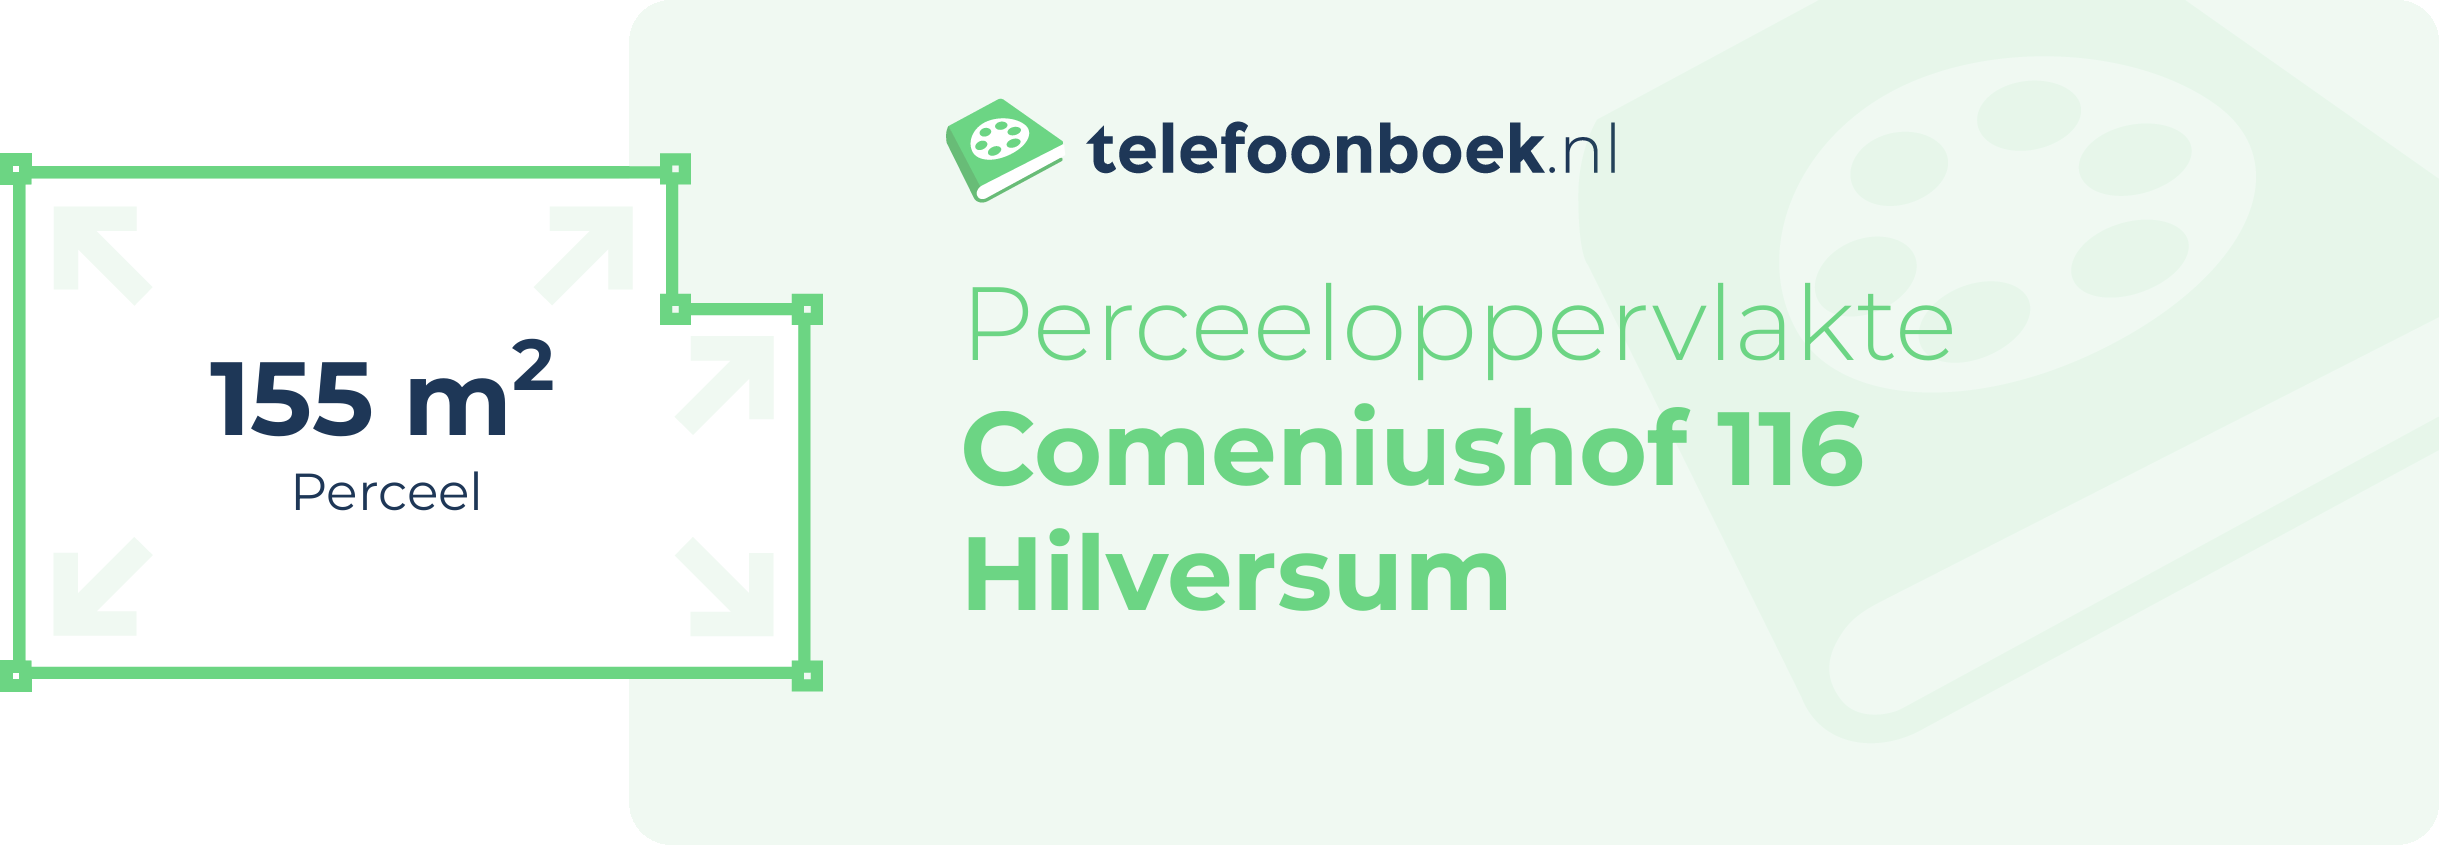 Perceeloppervlakte Comeniushof 116 Hilversum